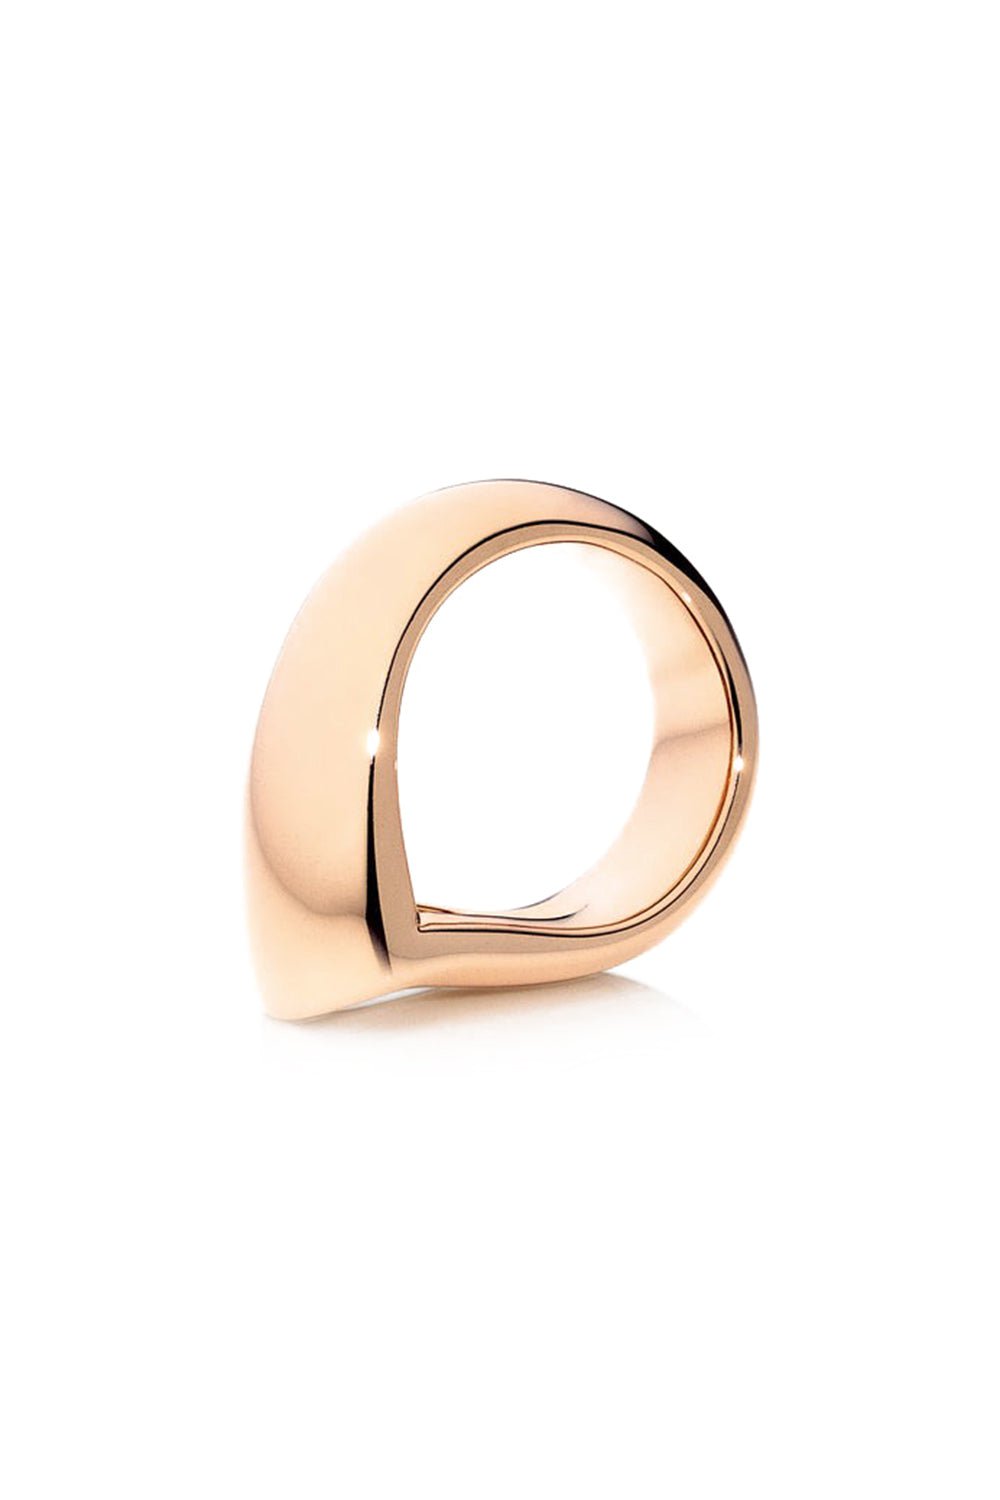 TAMARA COMOLLI-Signature Drop Ring-ROSE GOLD